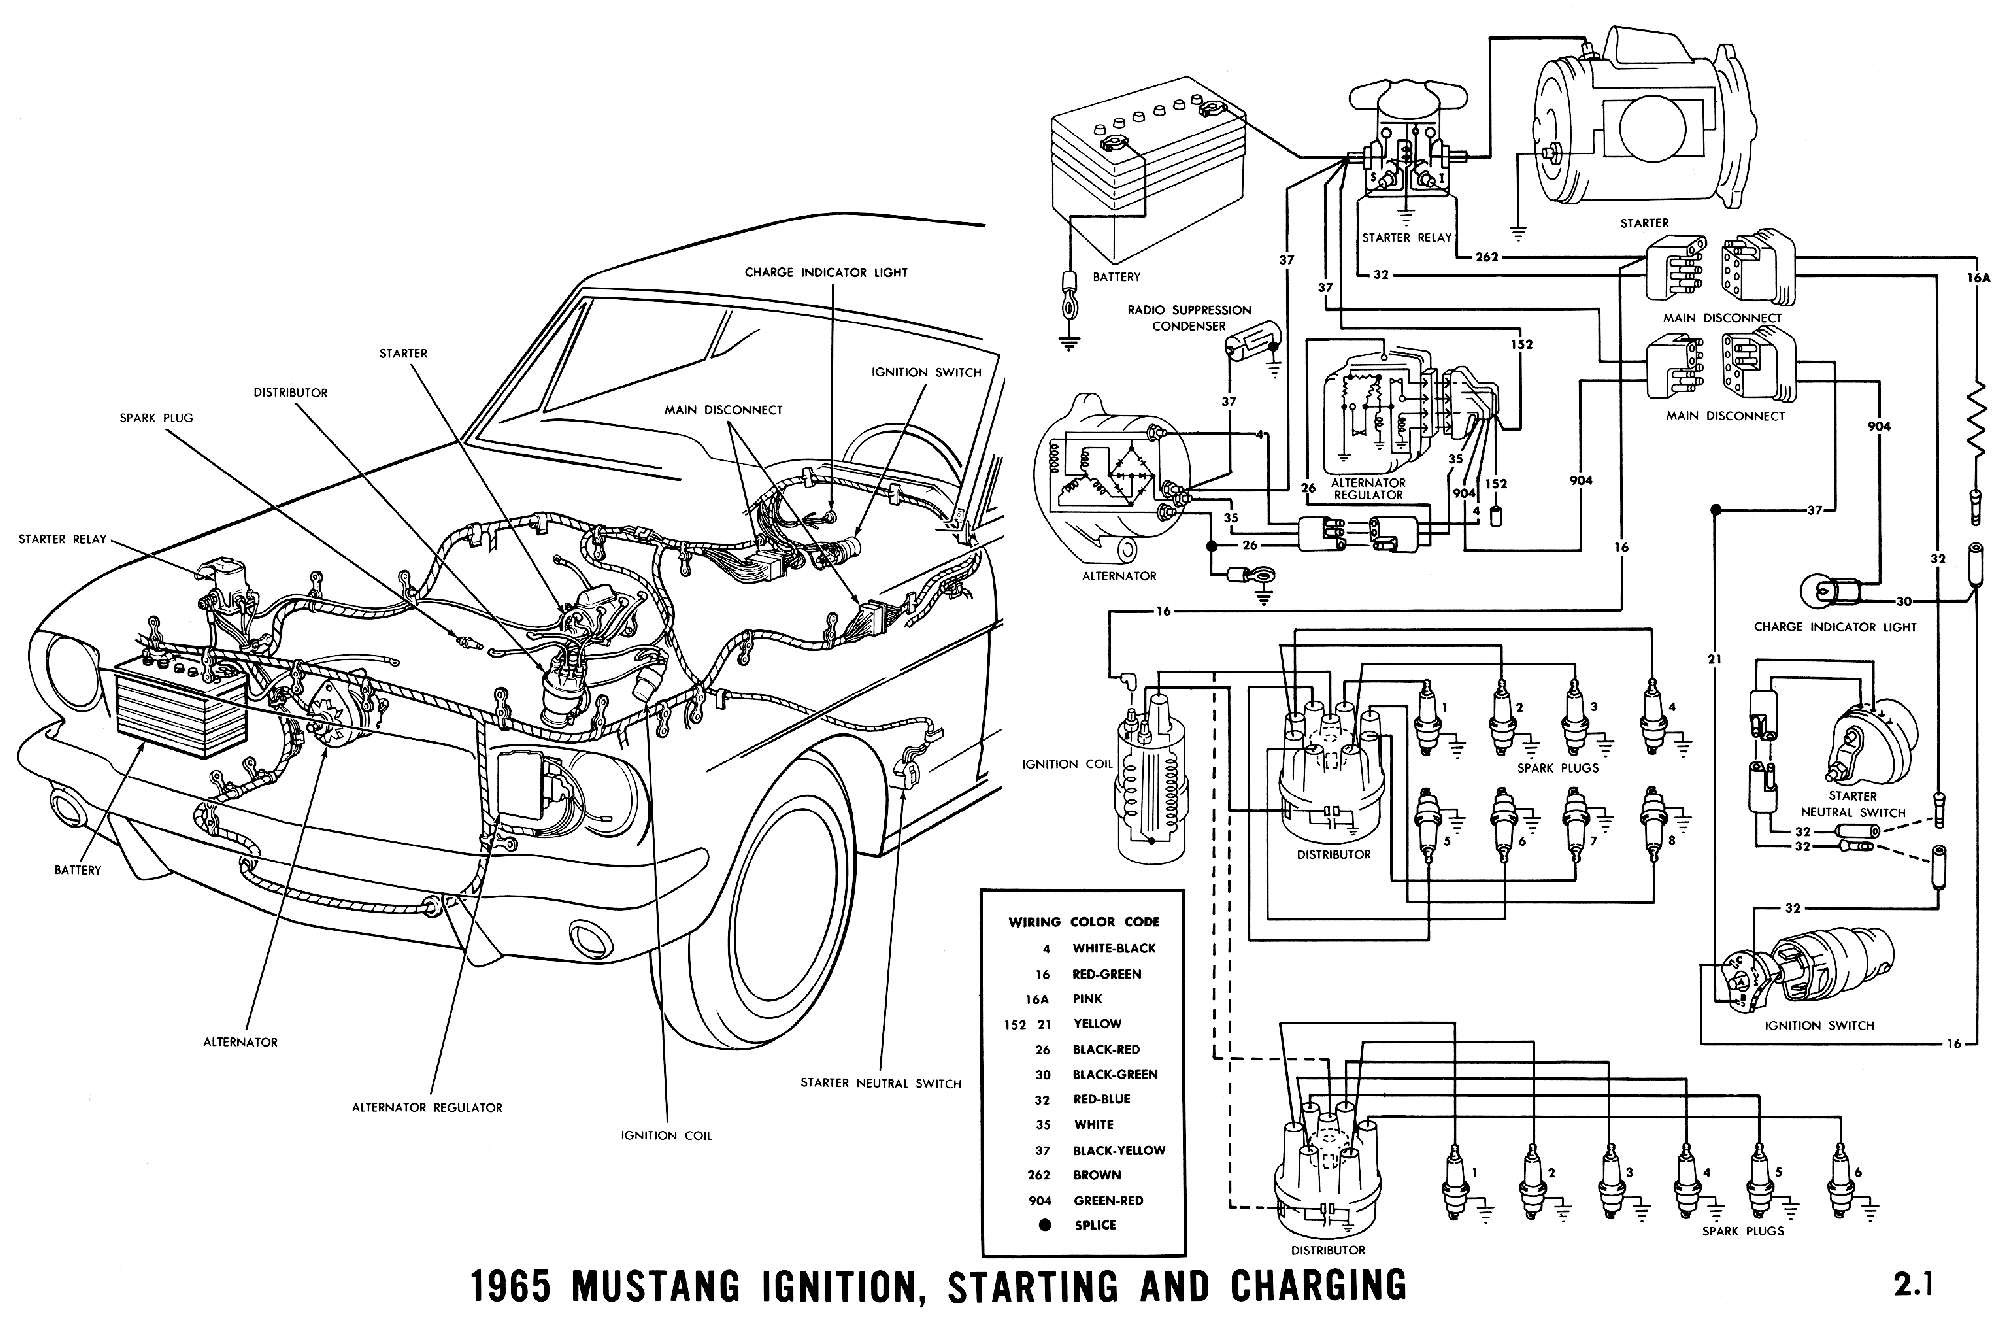 2000 Mustang Engine Diagram 1965 Mustang Wiring Diagrams Average Joe Restoration Brilliant ford Of 2000 Mustang Engine Diagram